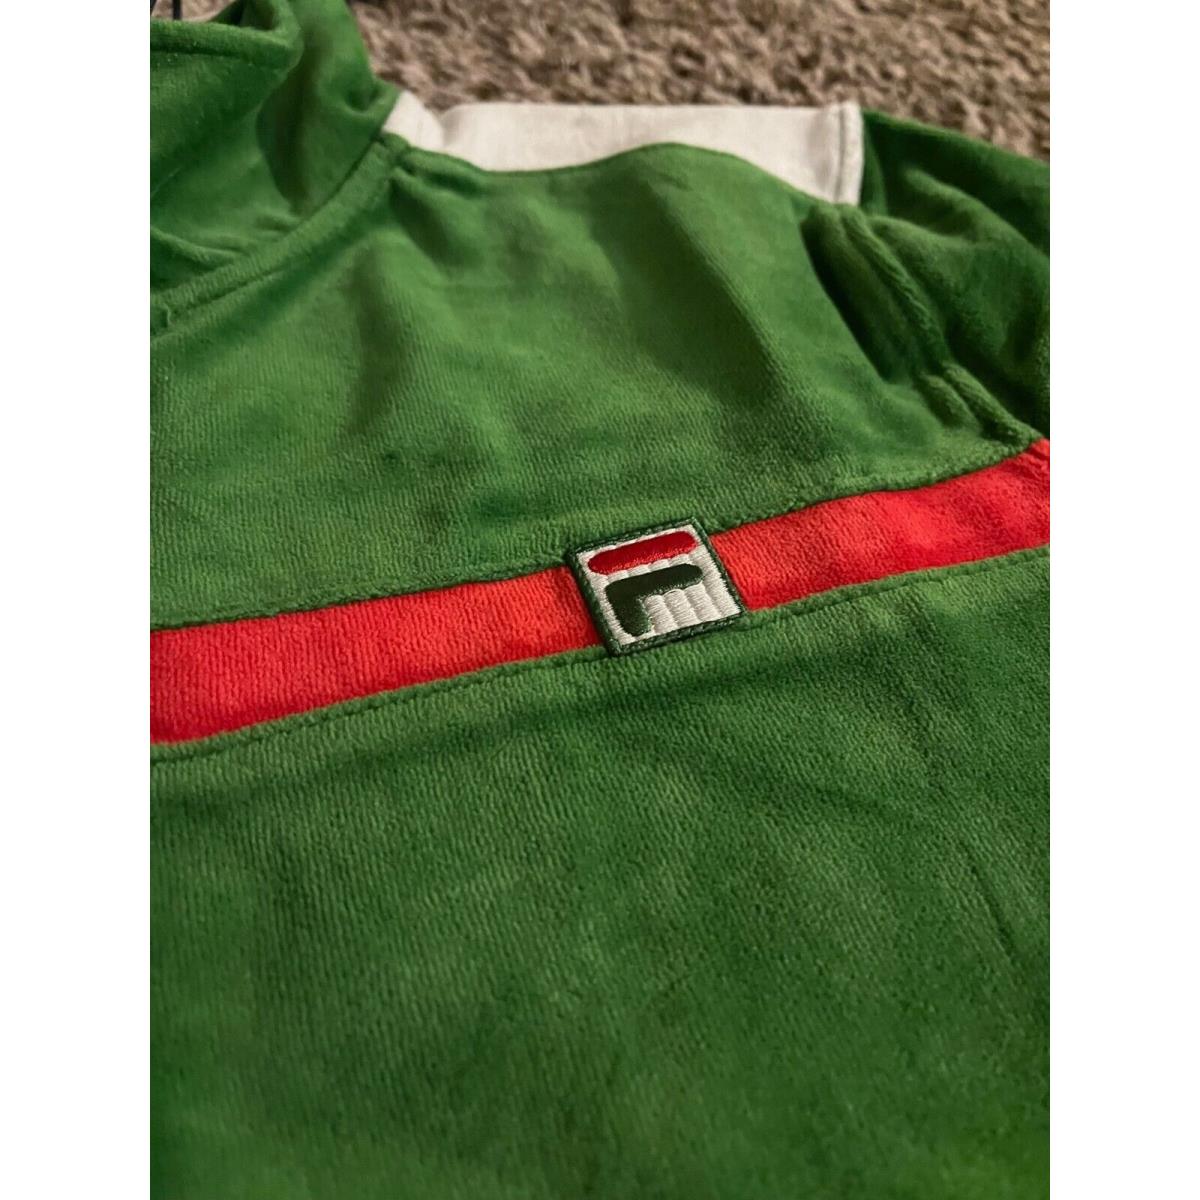 Fila clothing  - Green 4